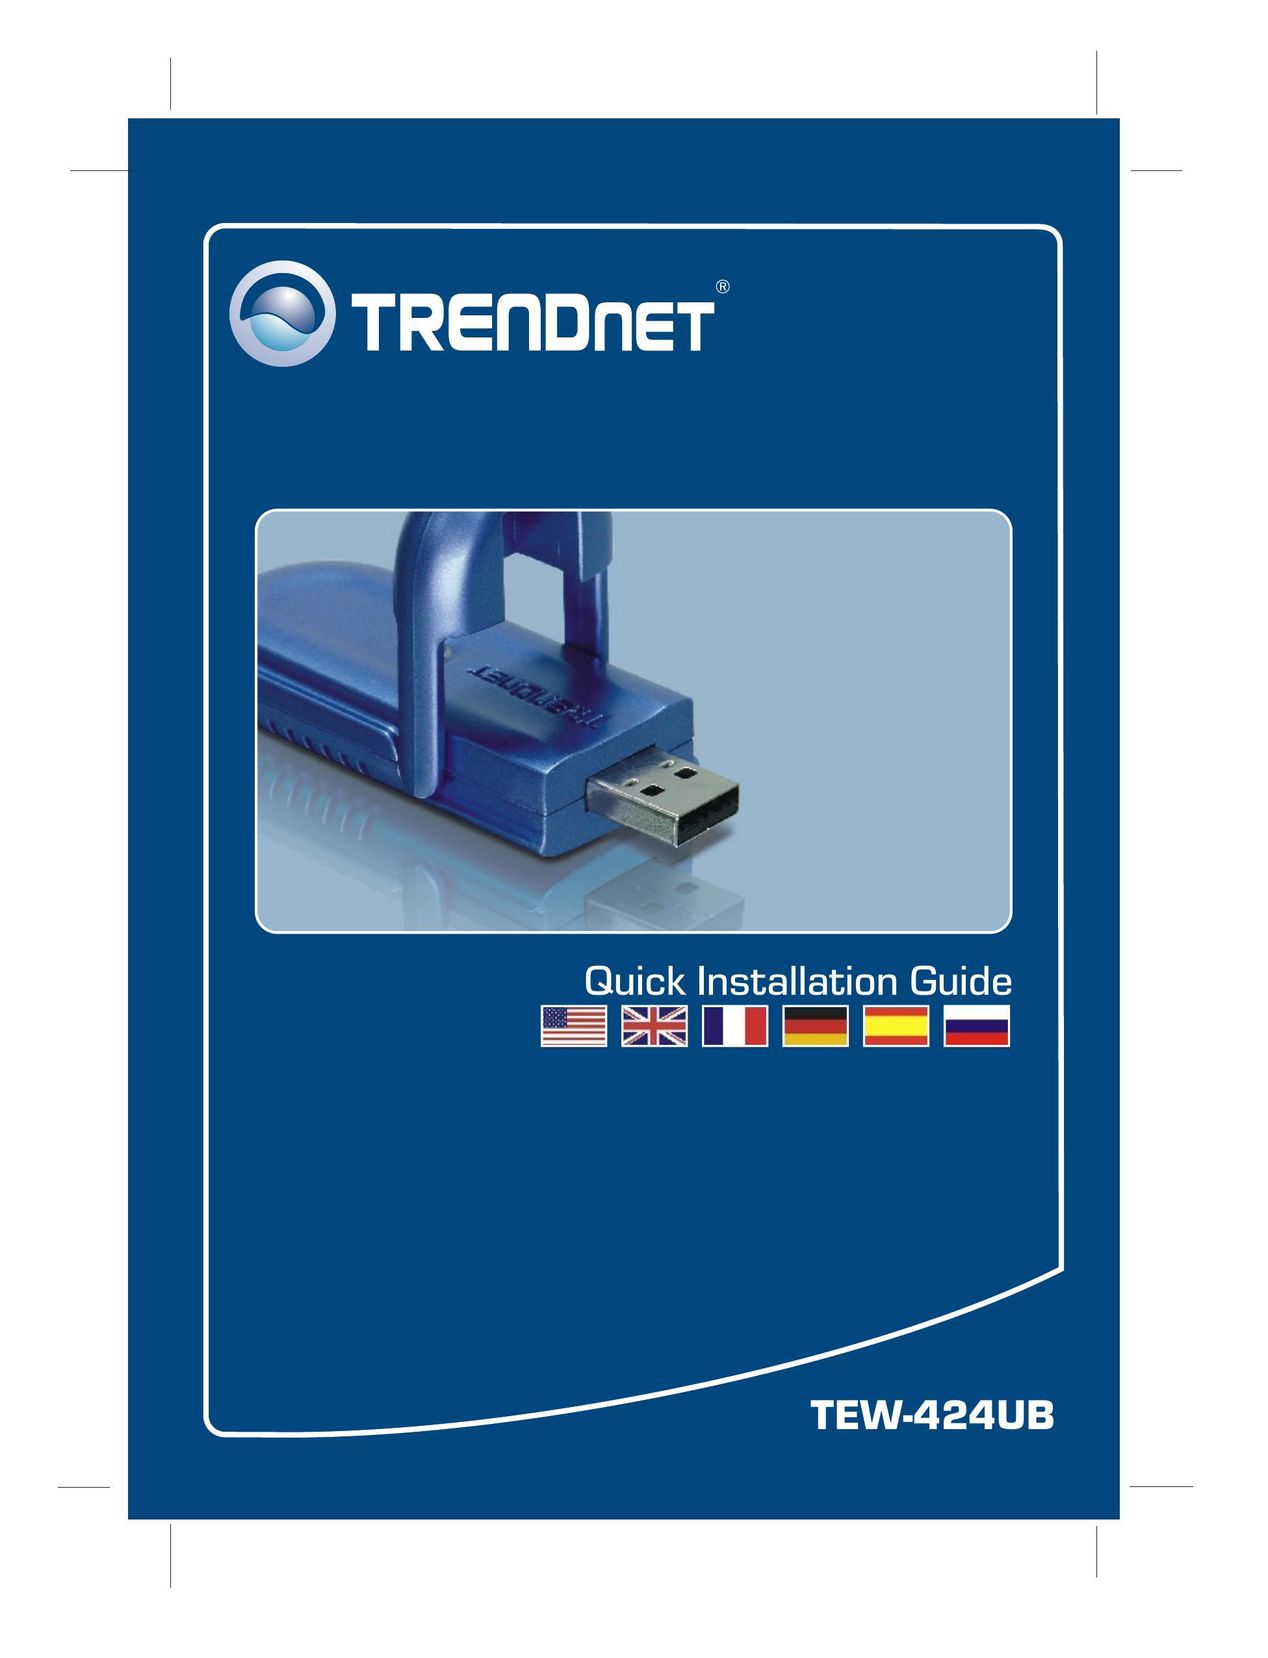 TRENDnet TEW-424UB Network Card User Manual